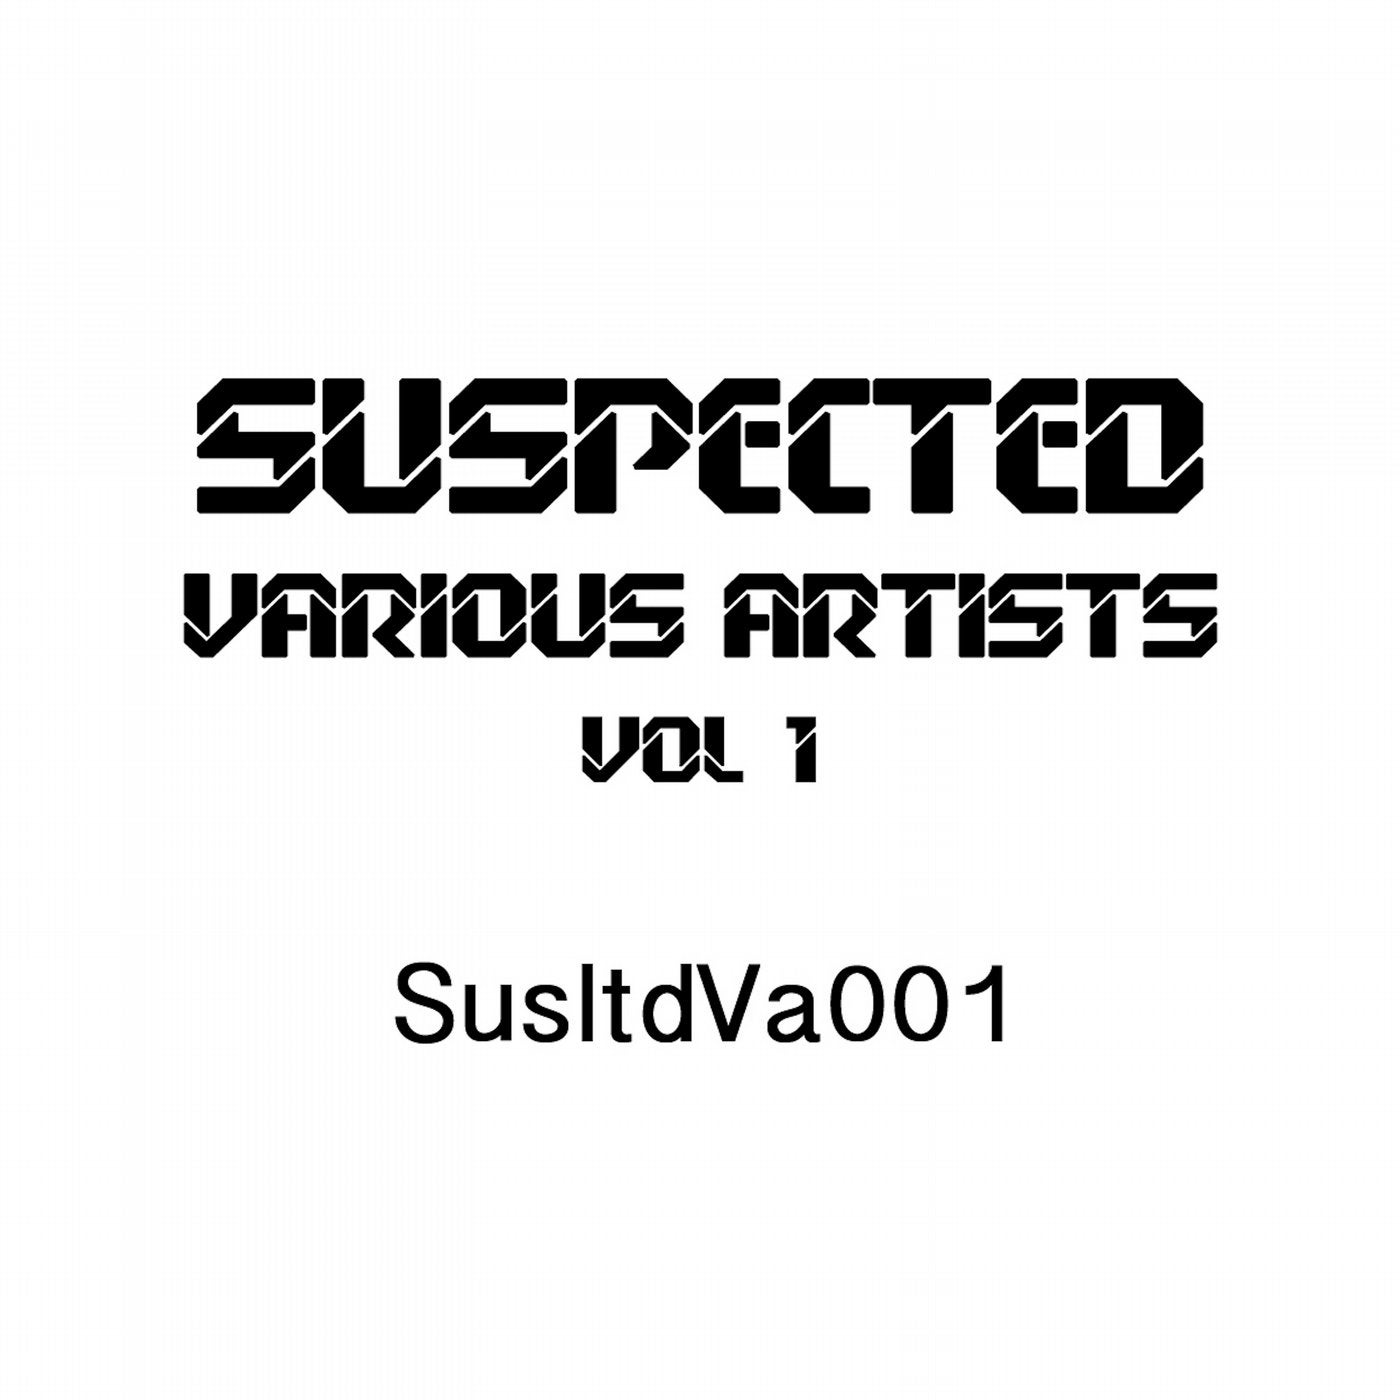 Suspected Various Artists, Vol. 1